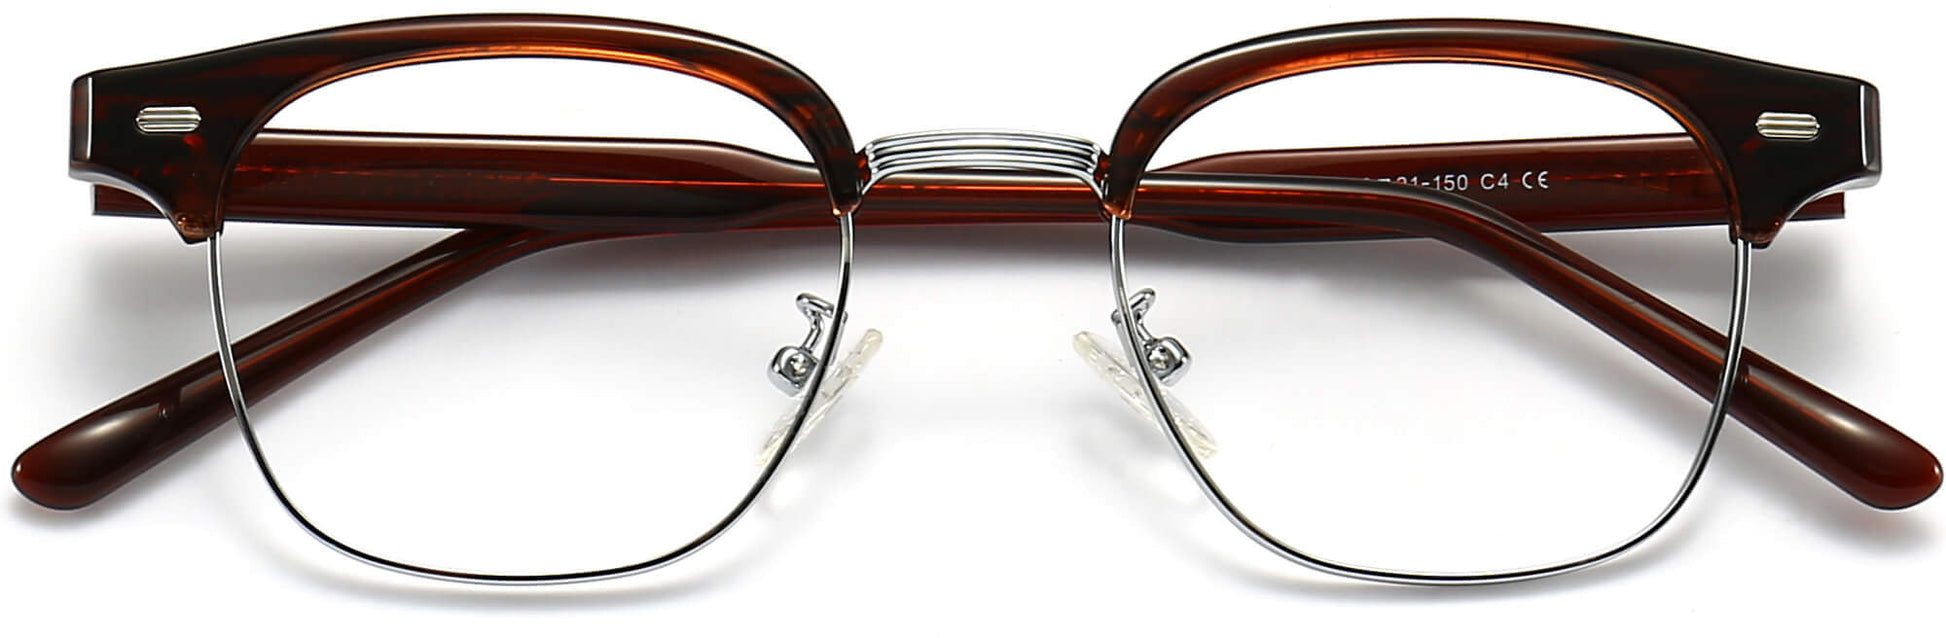 Boston Browline Brown Eyeglasses from ANRRI, closed view